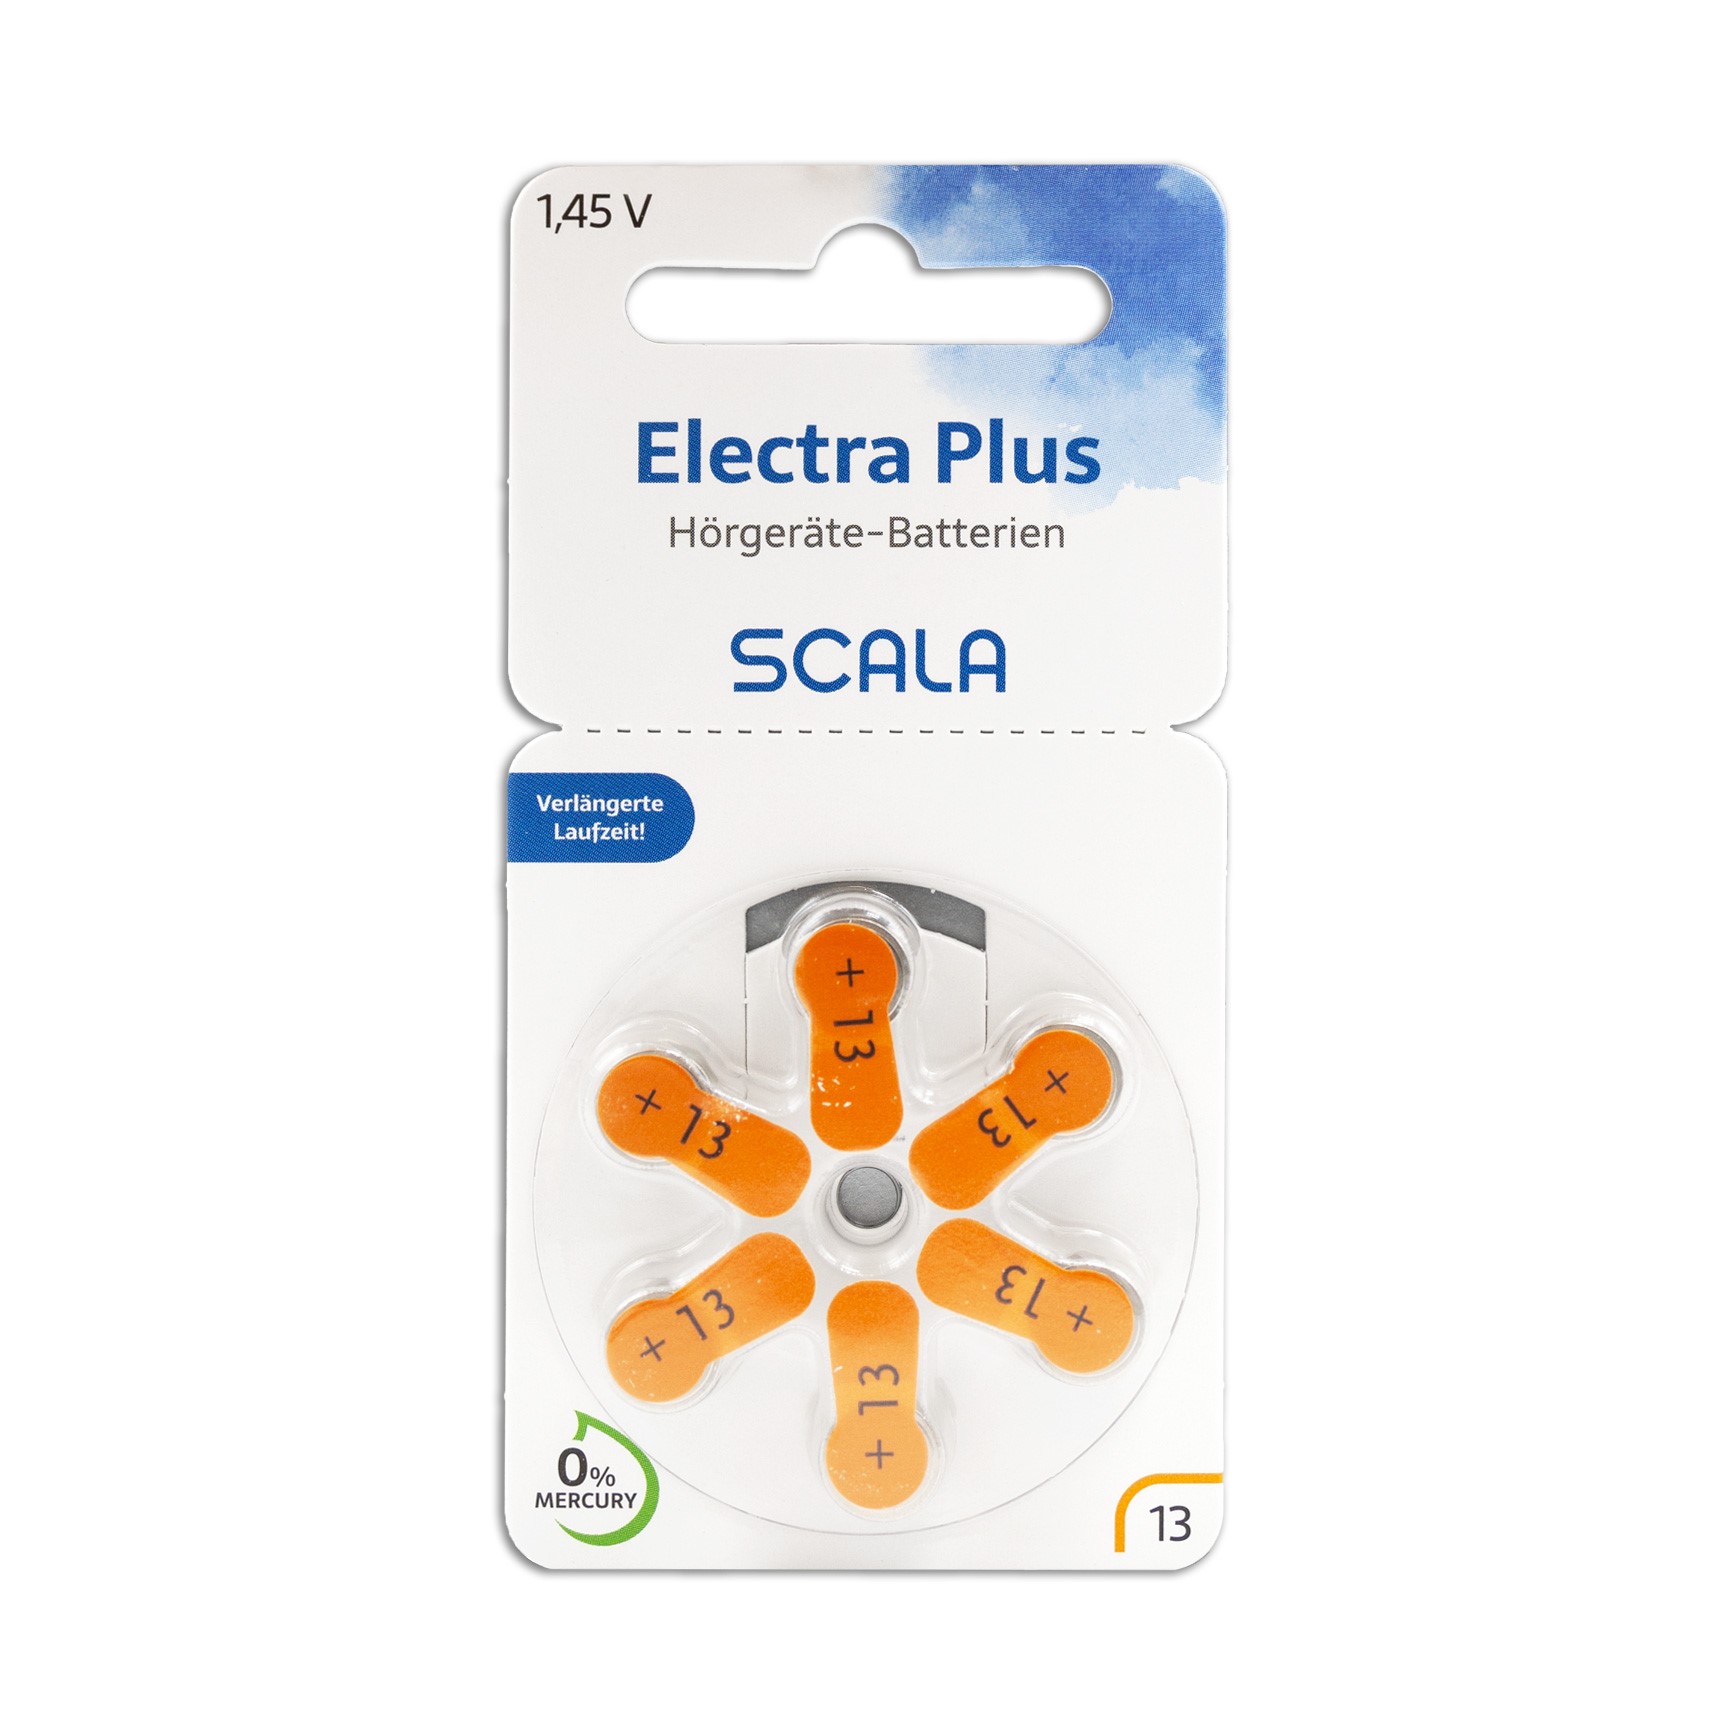  Scala 10er Pack Högerätebatterien - Electra Plus 13 mercury free 